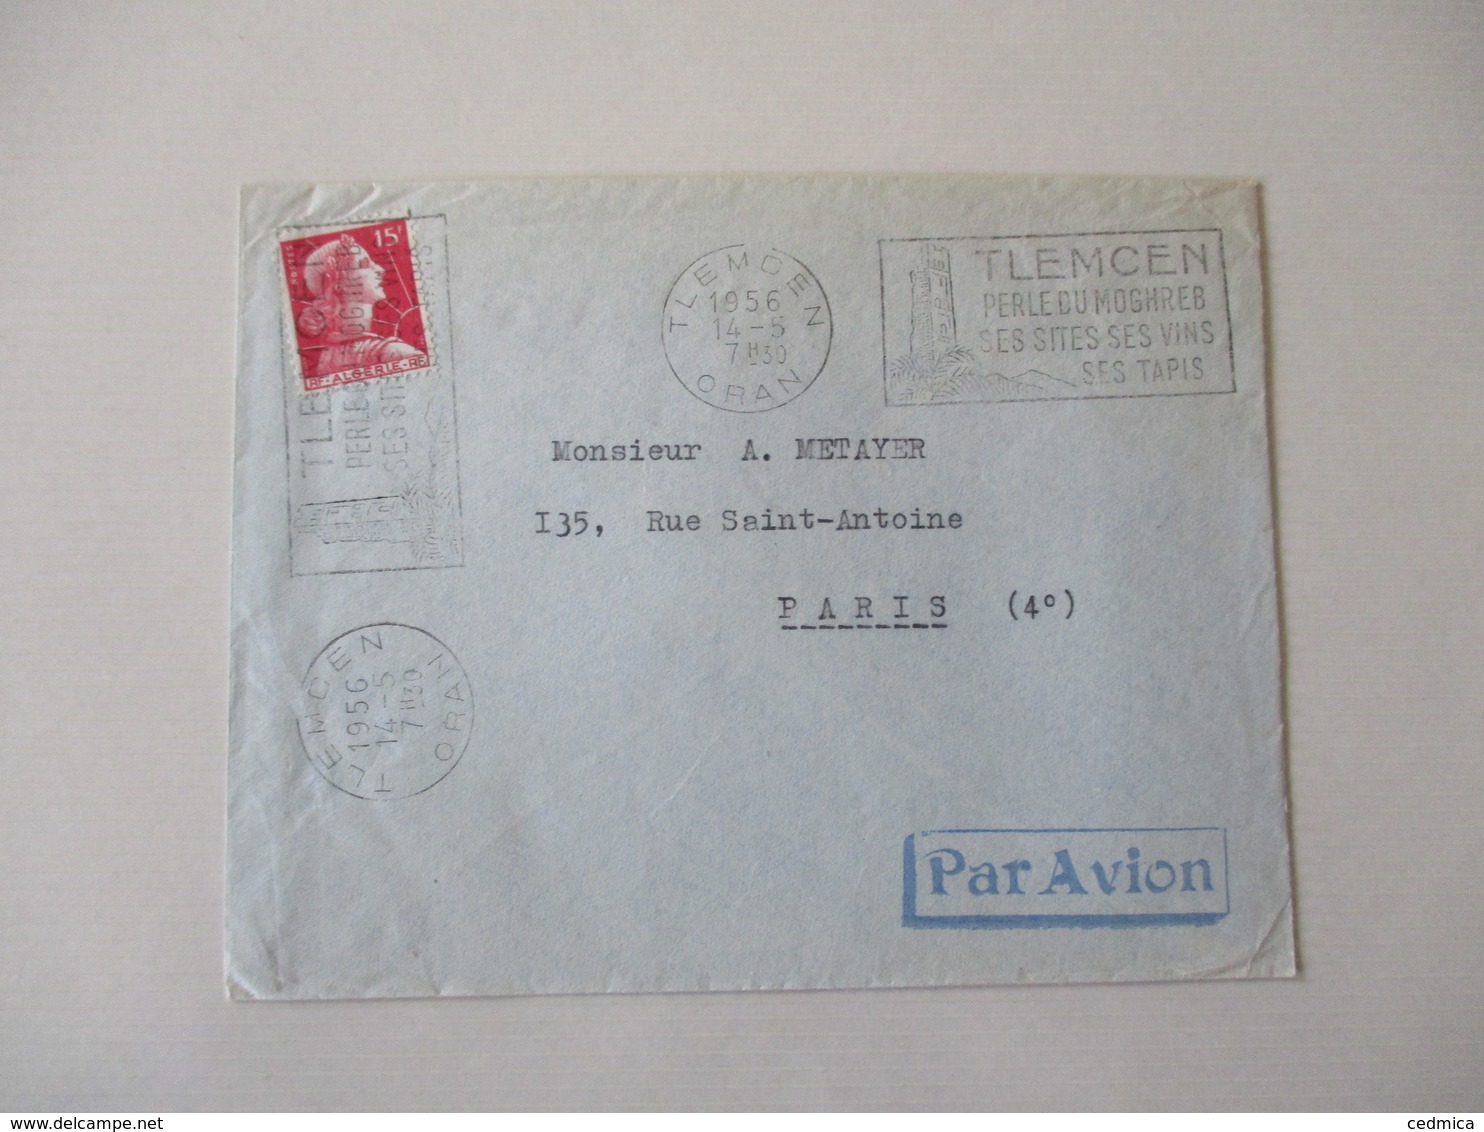 TLEMCEM 1956 13-5 ORAN TLEMCEM PERLE DU MOGHREB SES SITES SES VINS SES TAPIS TIMBRE 15F RF ALGERIE - Covers & Documents